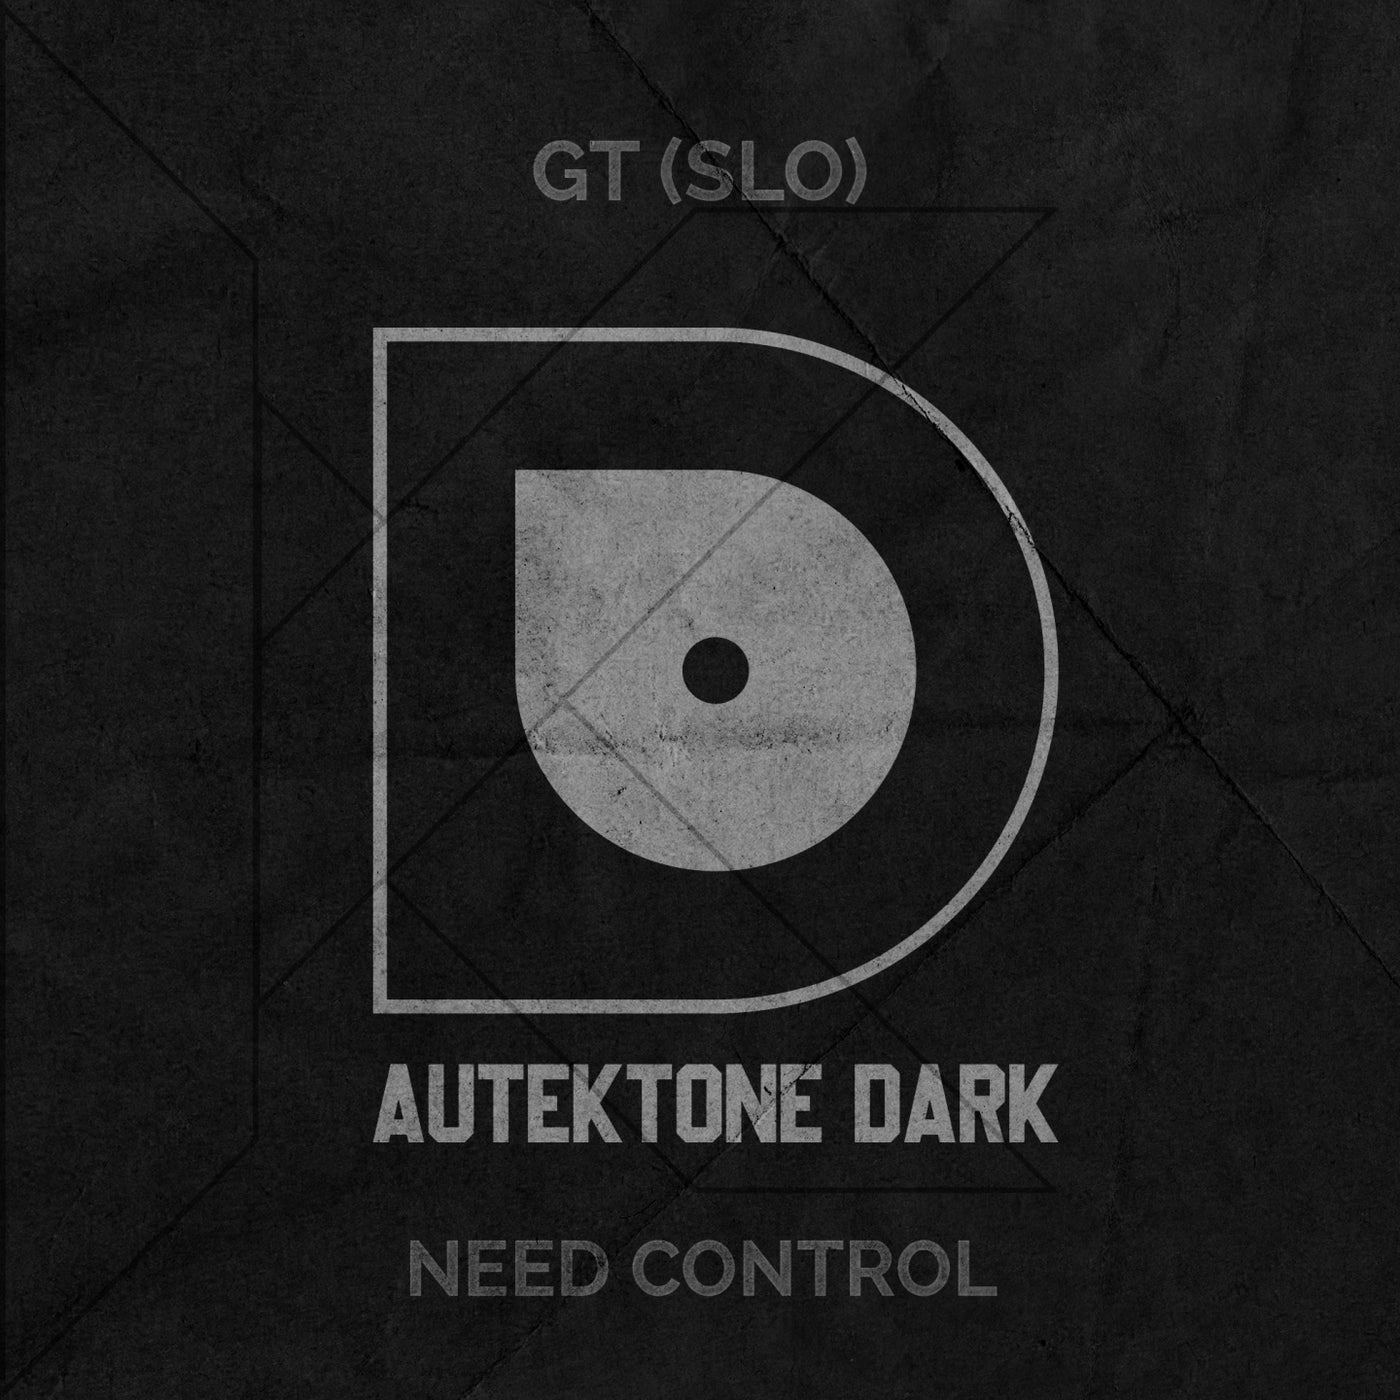 GT (SLO) - Need Control [AUTEKTONE DARK]